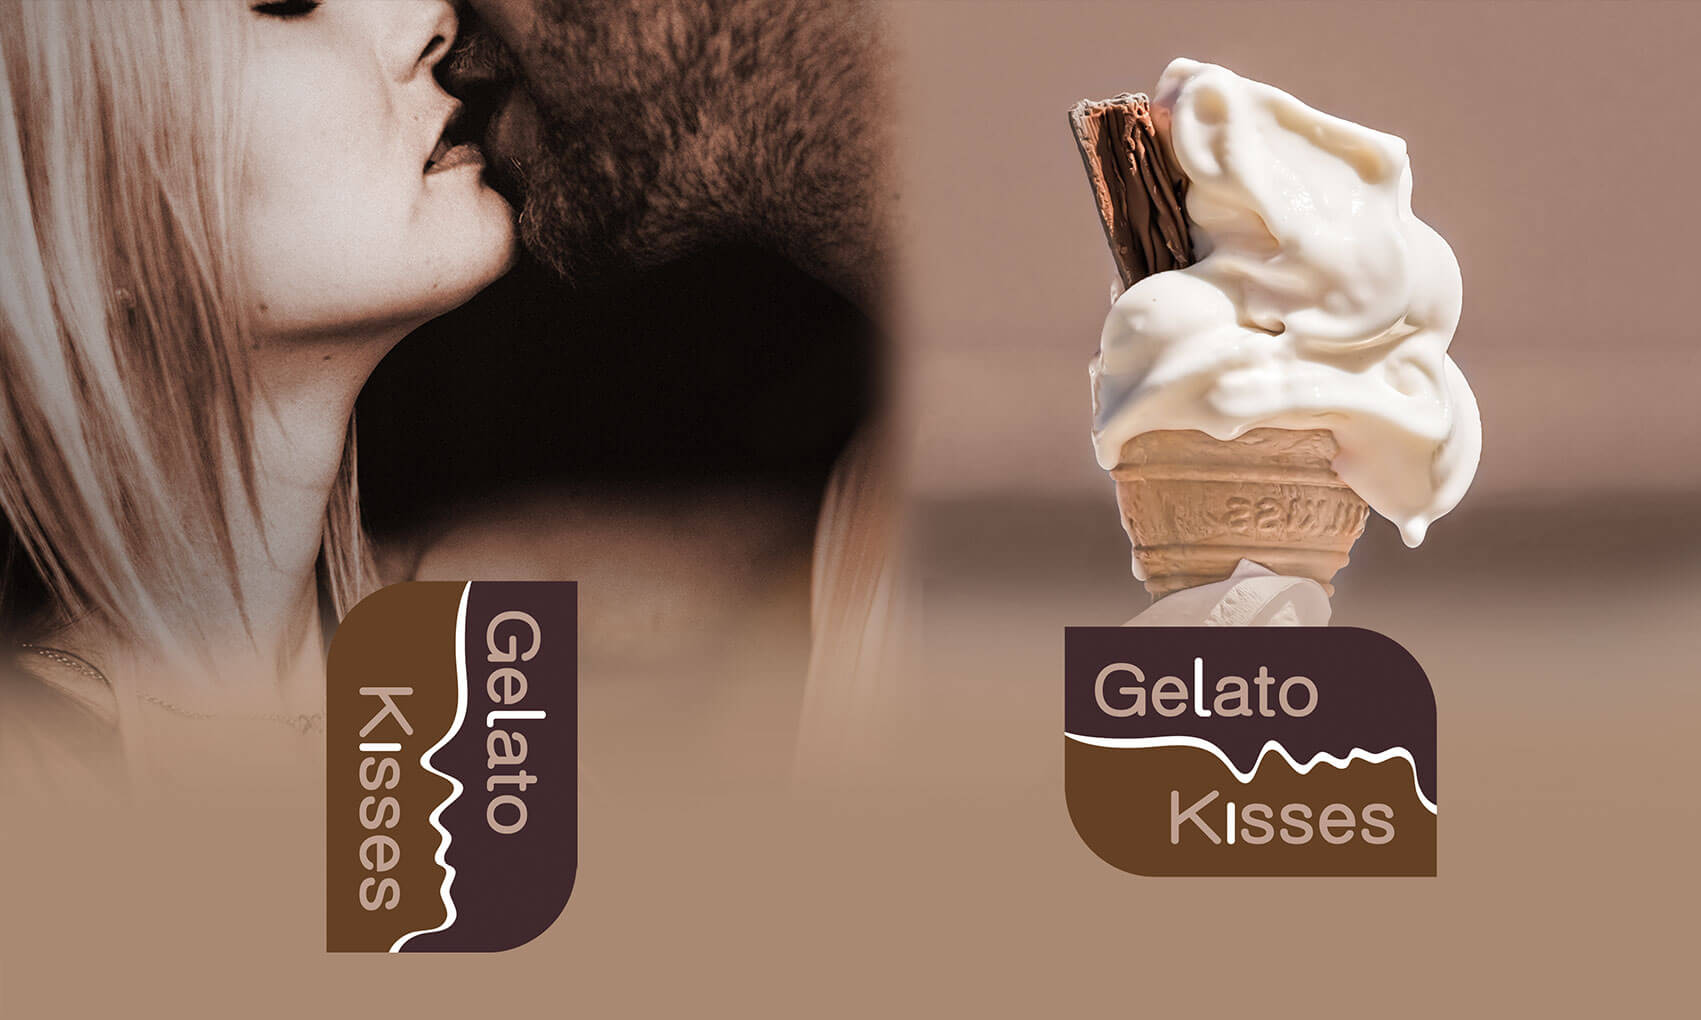 Gelato-kisses網站規範